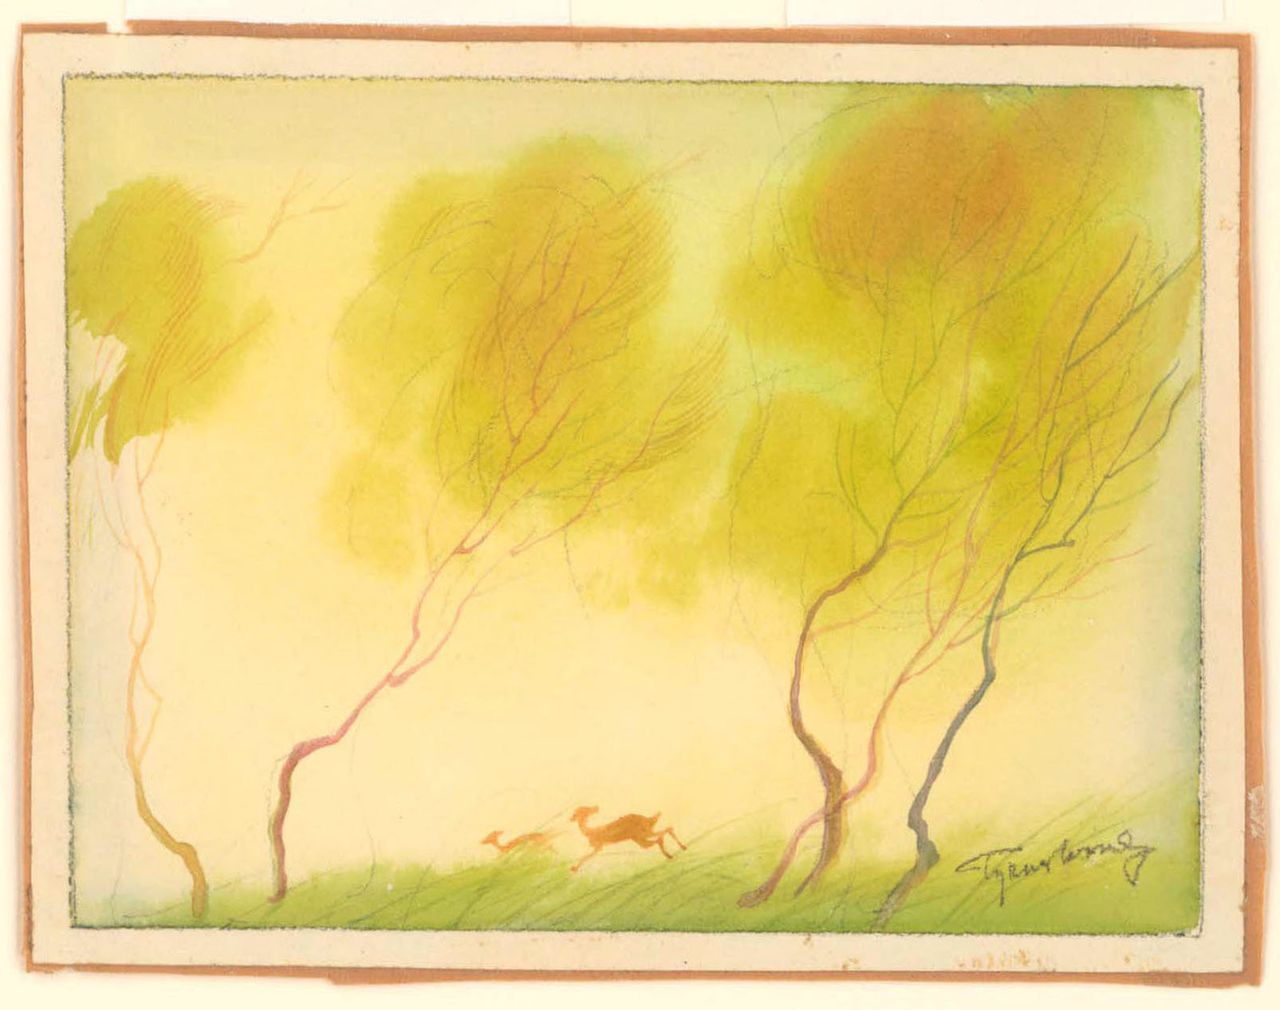 Bambi visual development, 1942, watercolor on paper